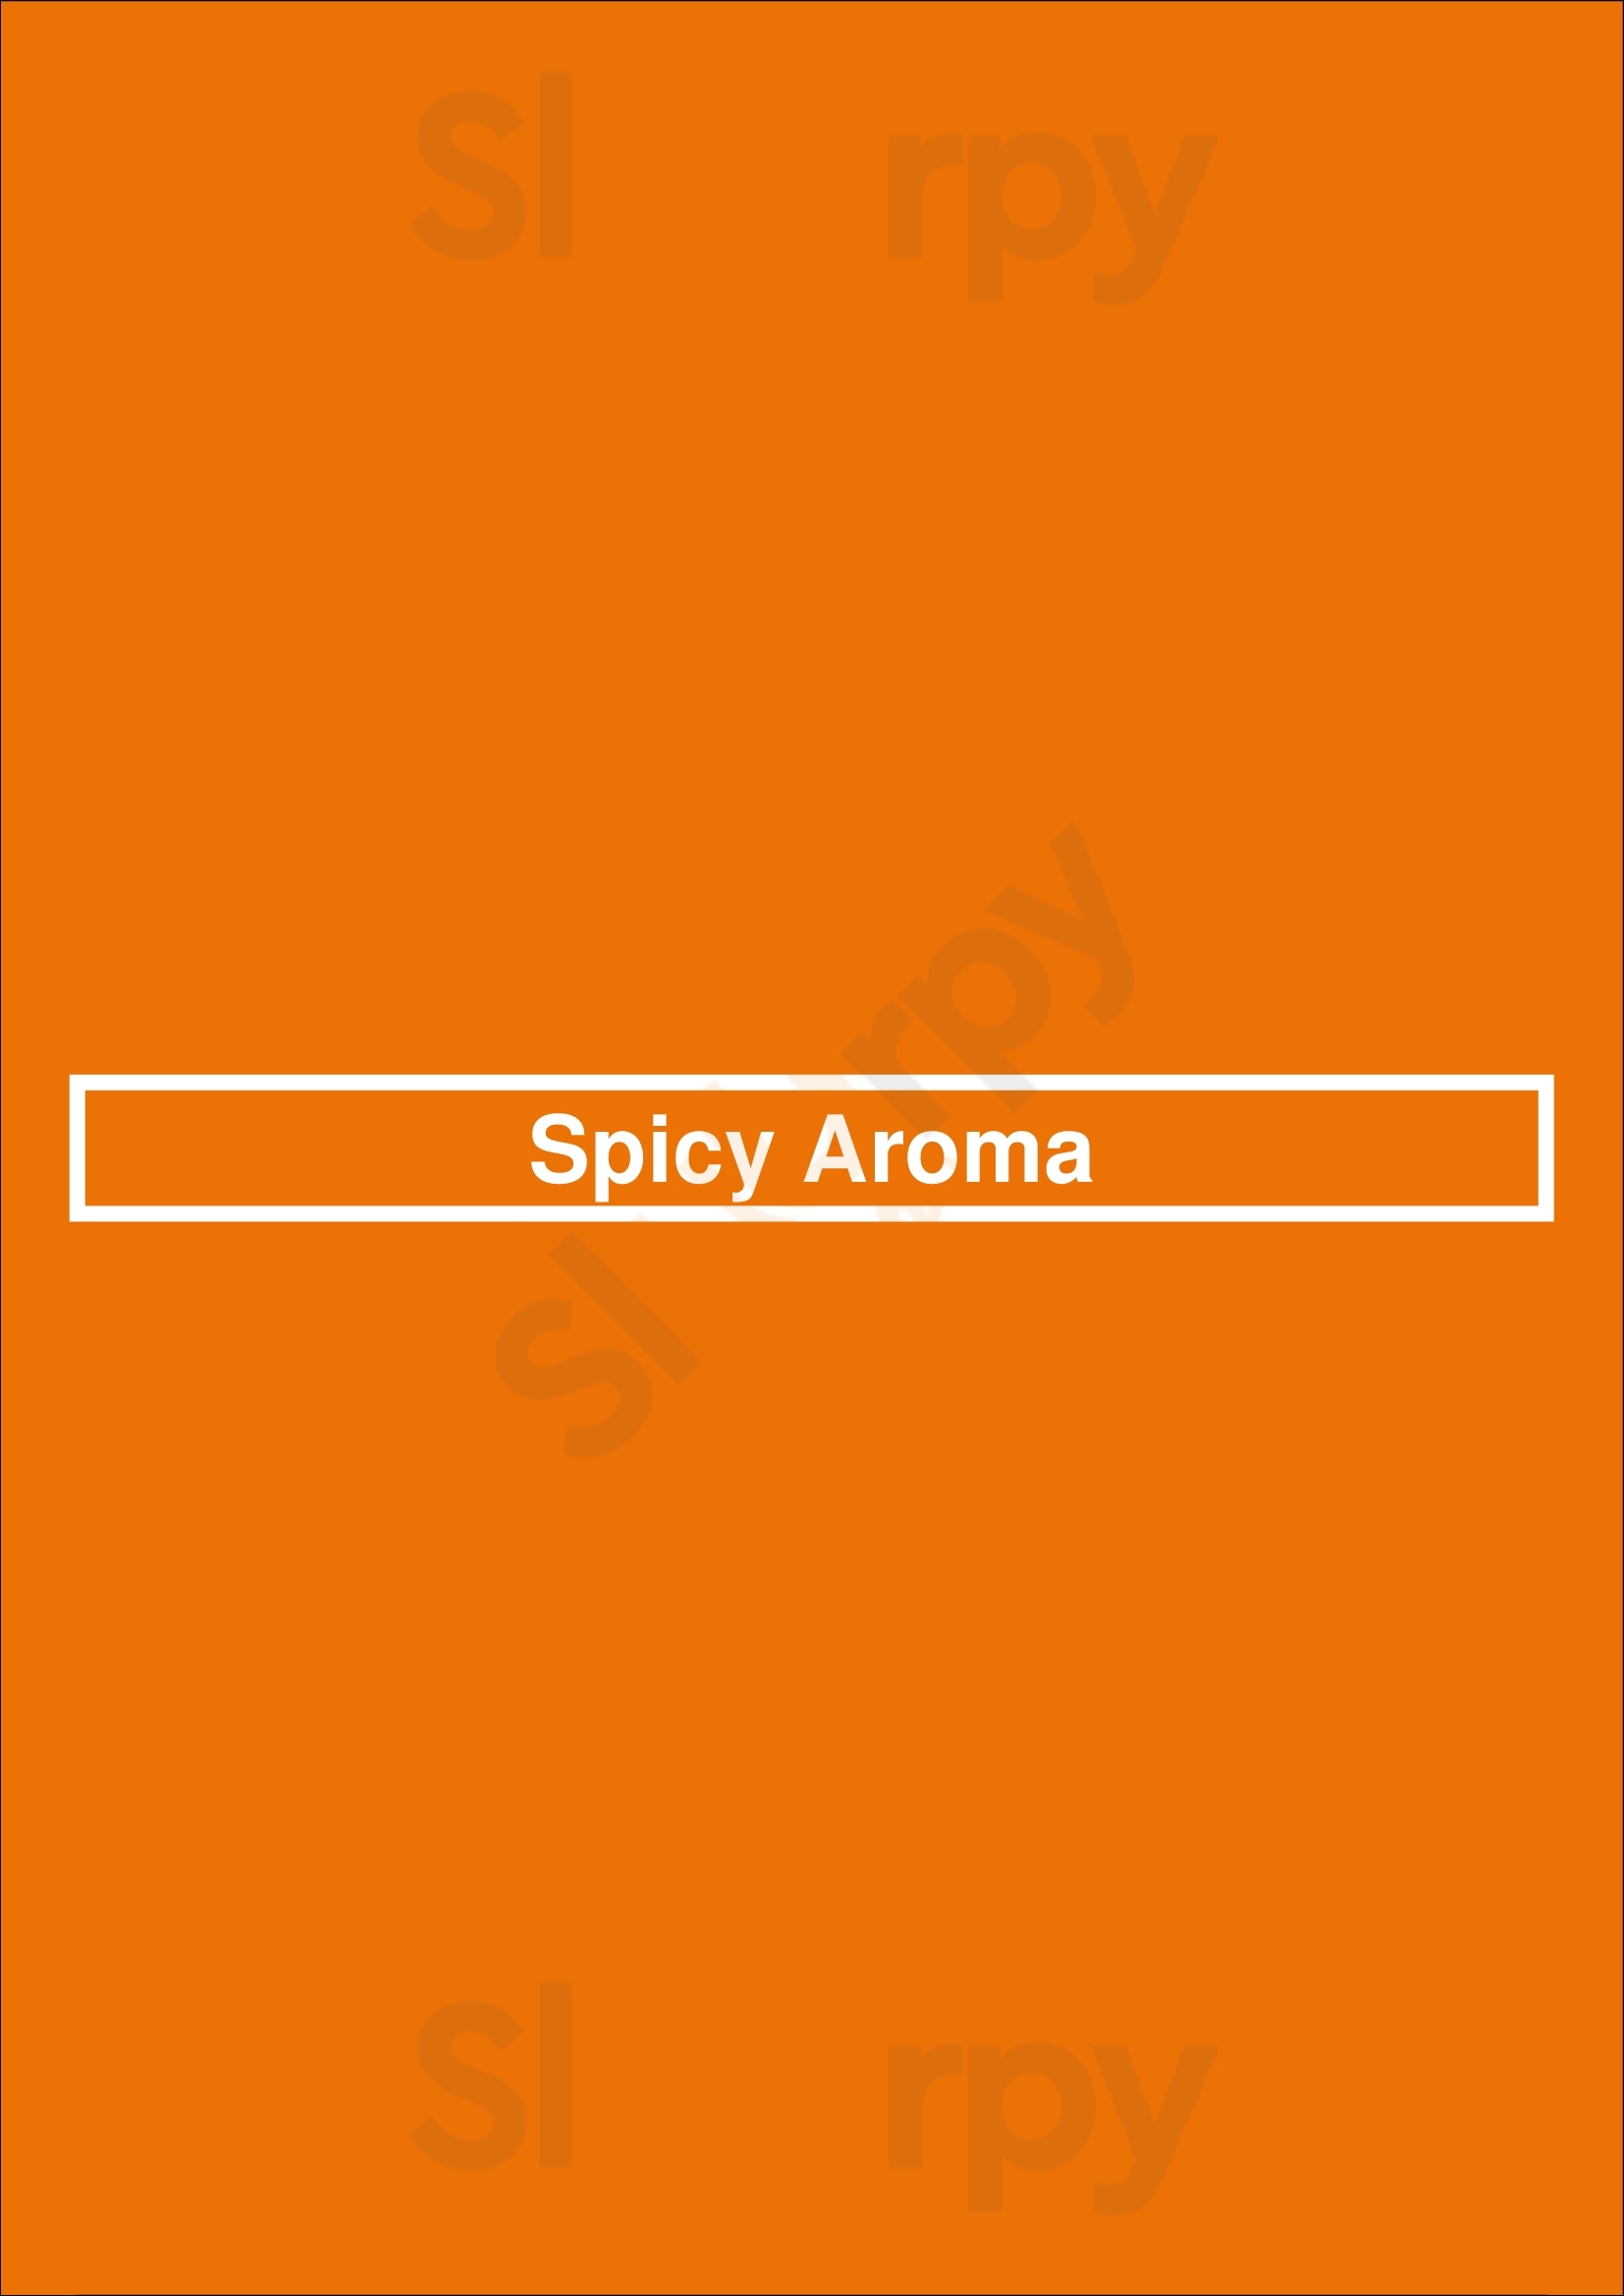 Spicy Aroma Rogerstone Menu - 1